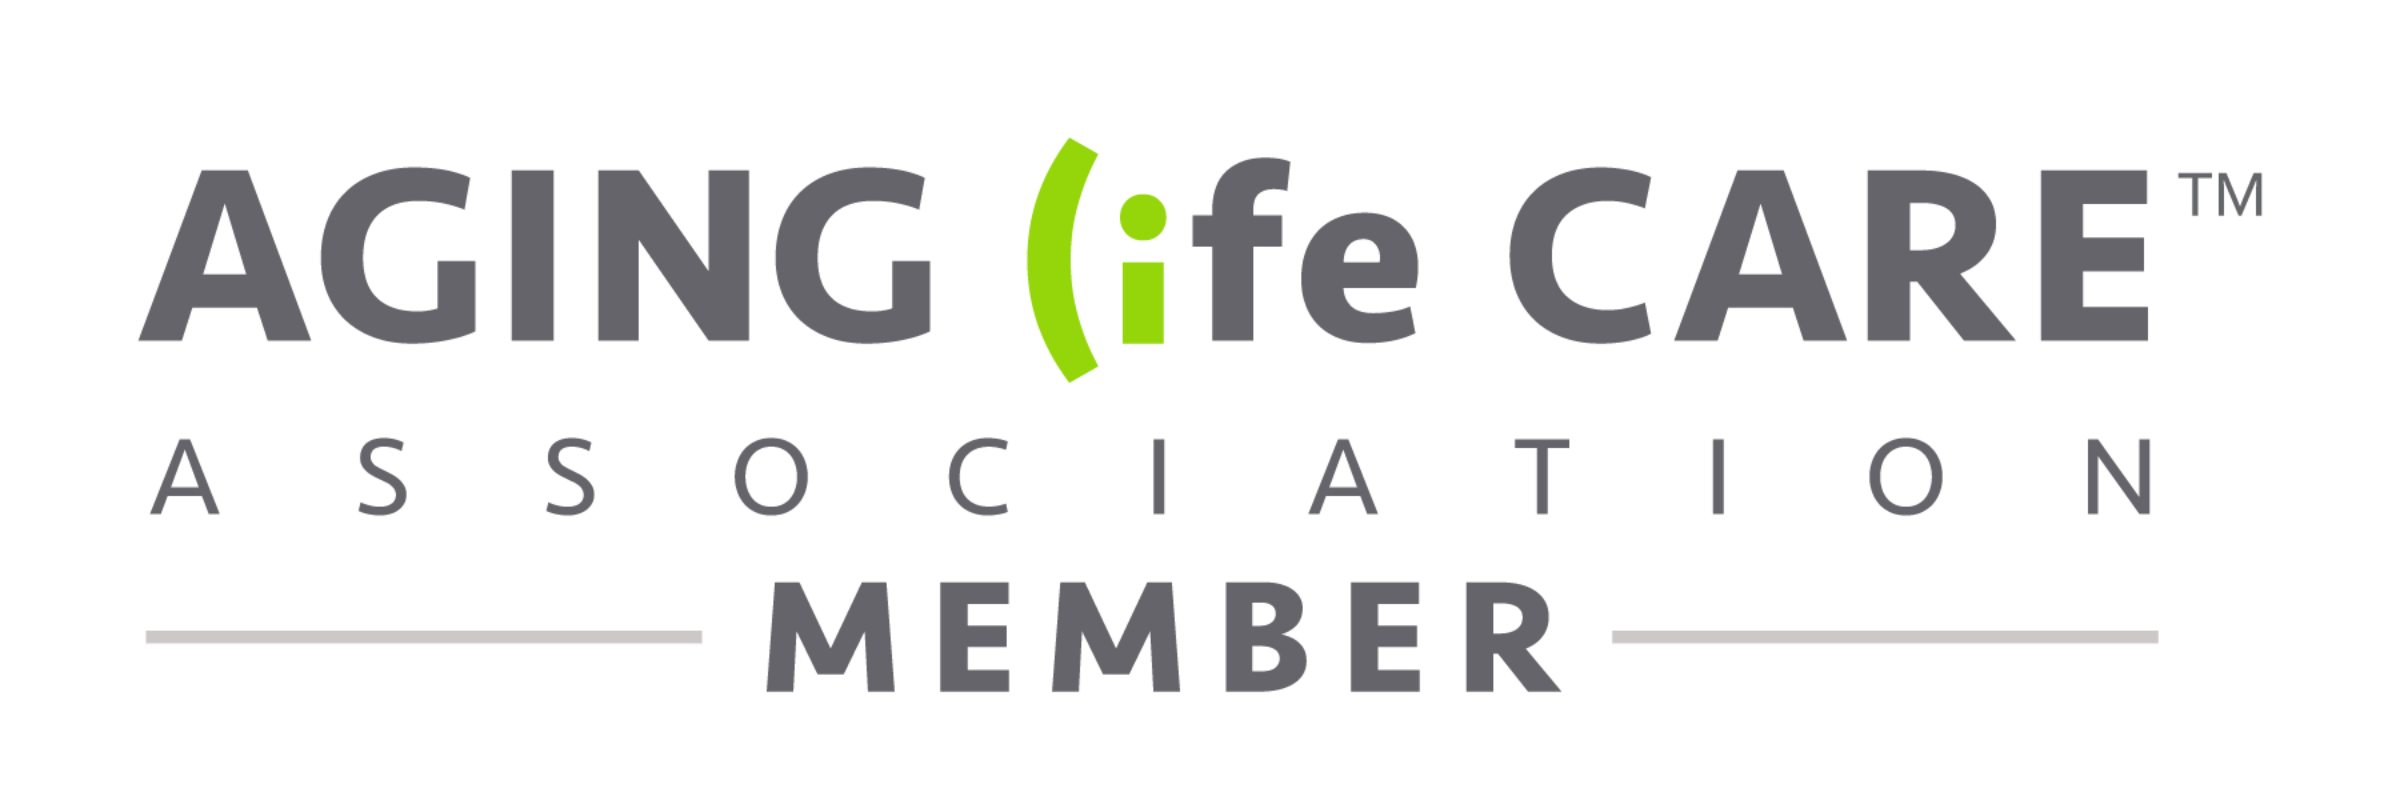 AgingLife Logo-01.png